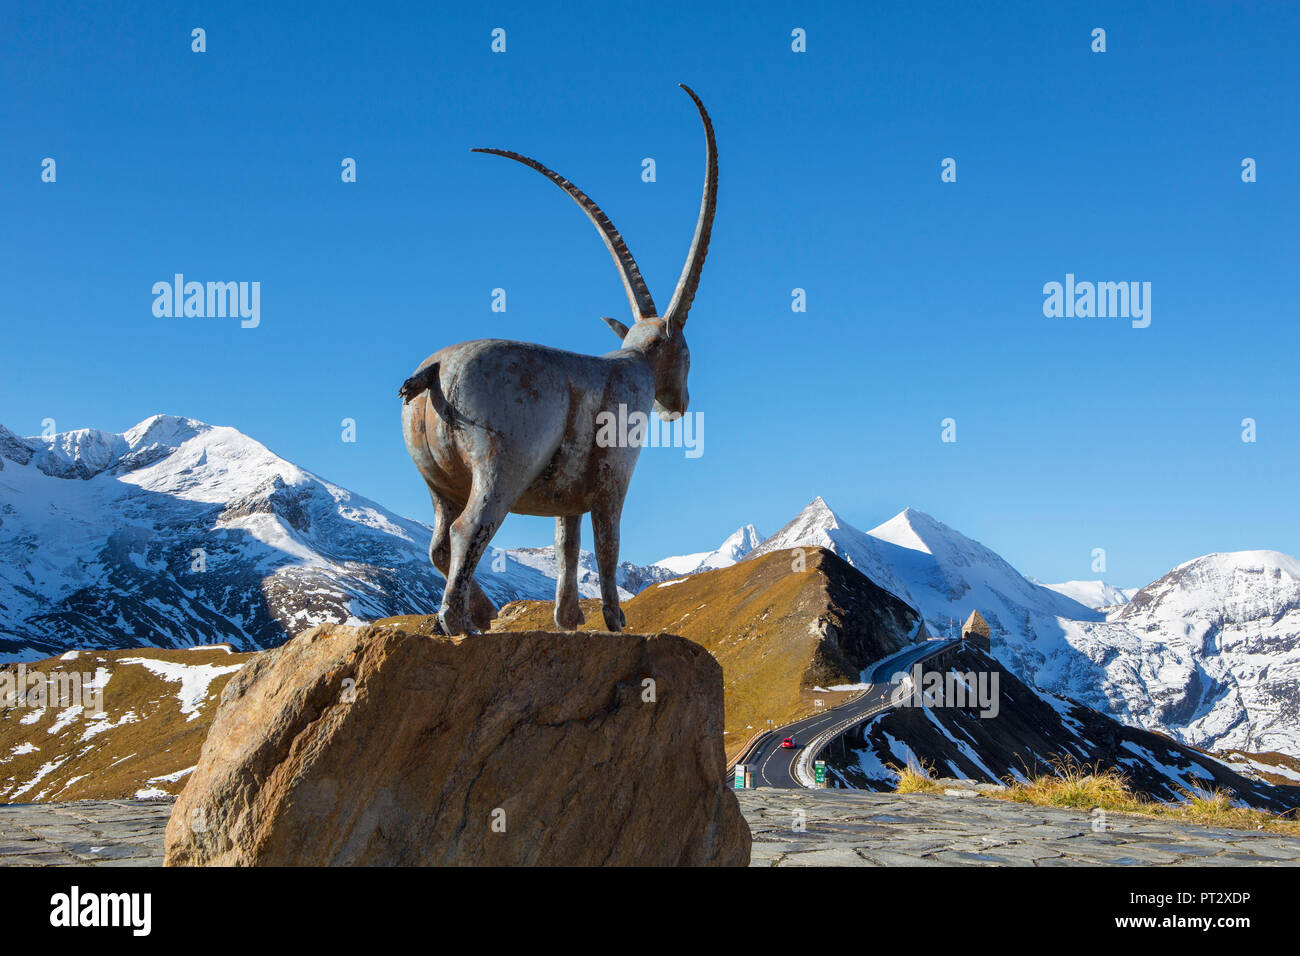 Austria, Salzburg State, Grossglockner High Alpine Road, ibex Statue Stock Photo